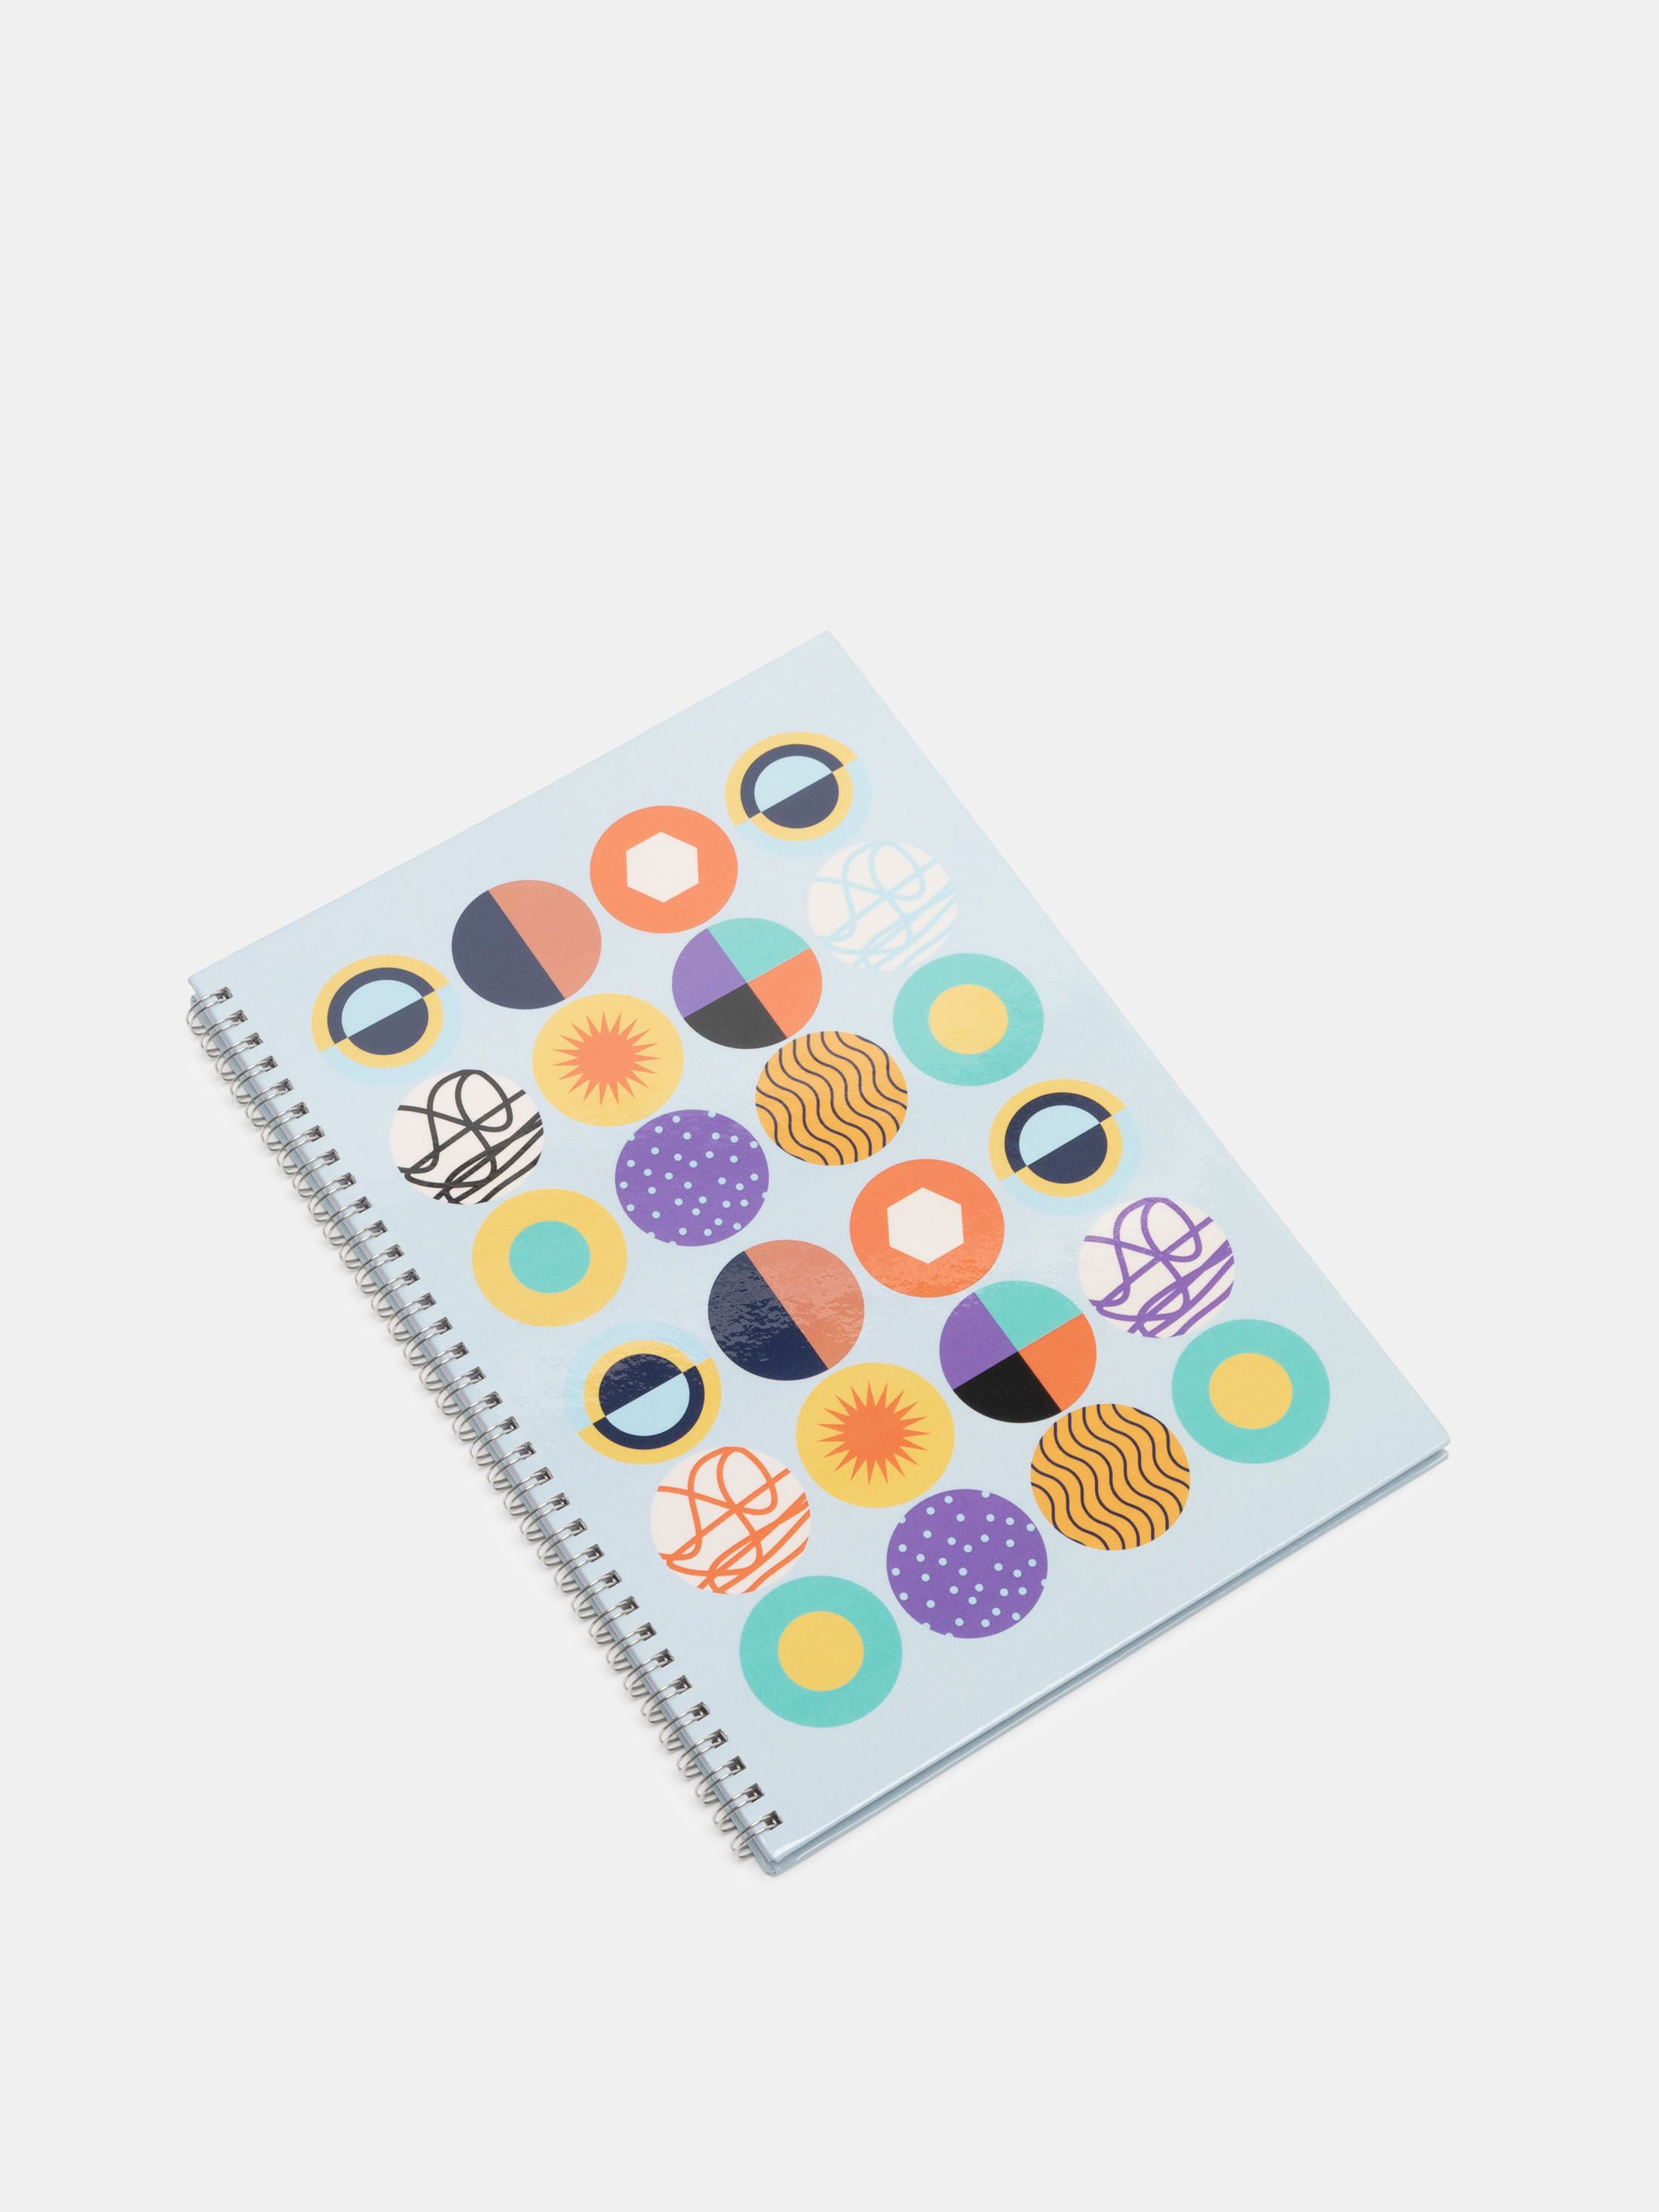 customized notebooks